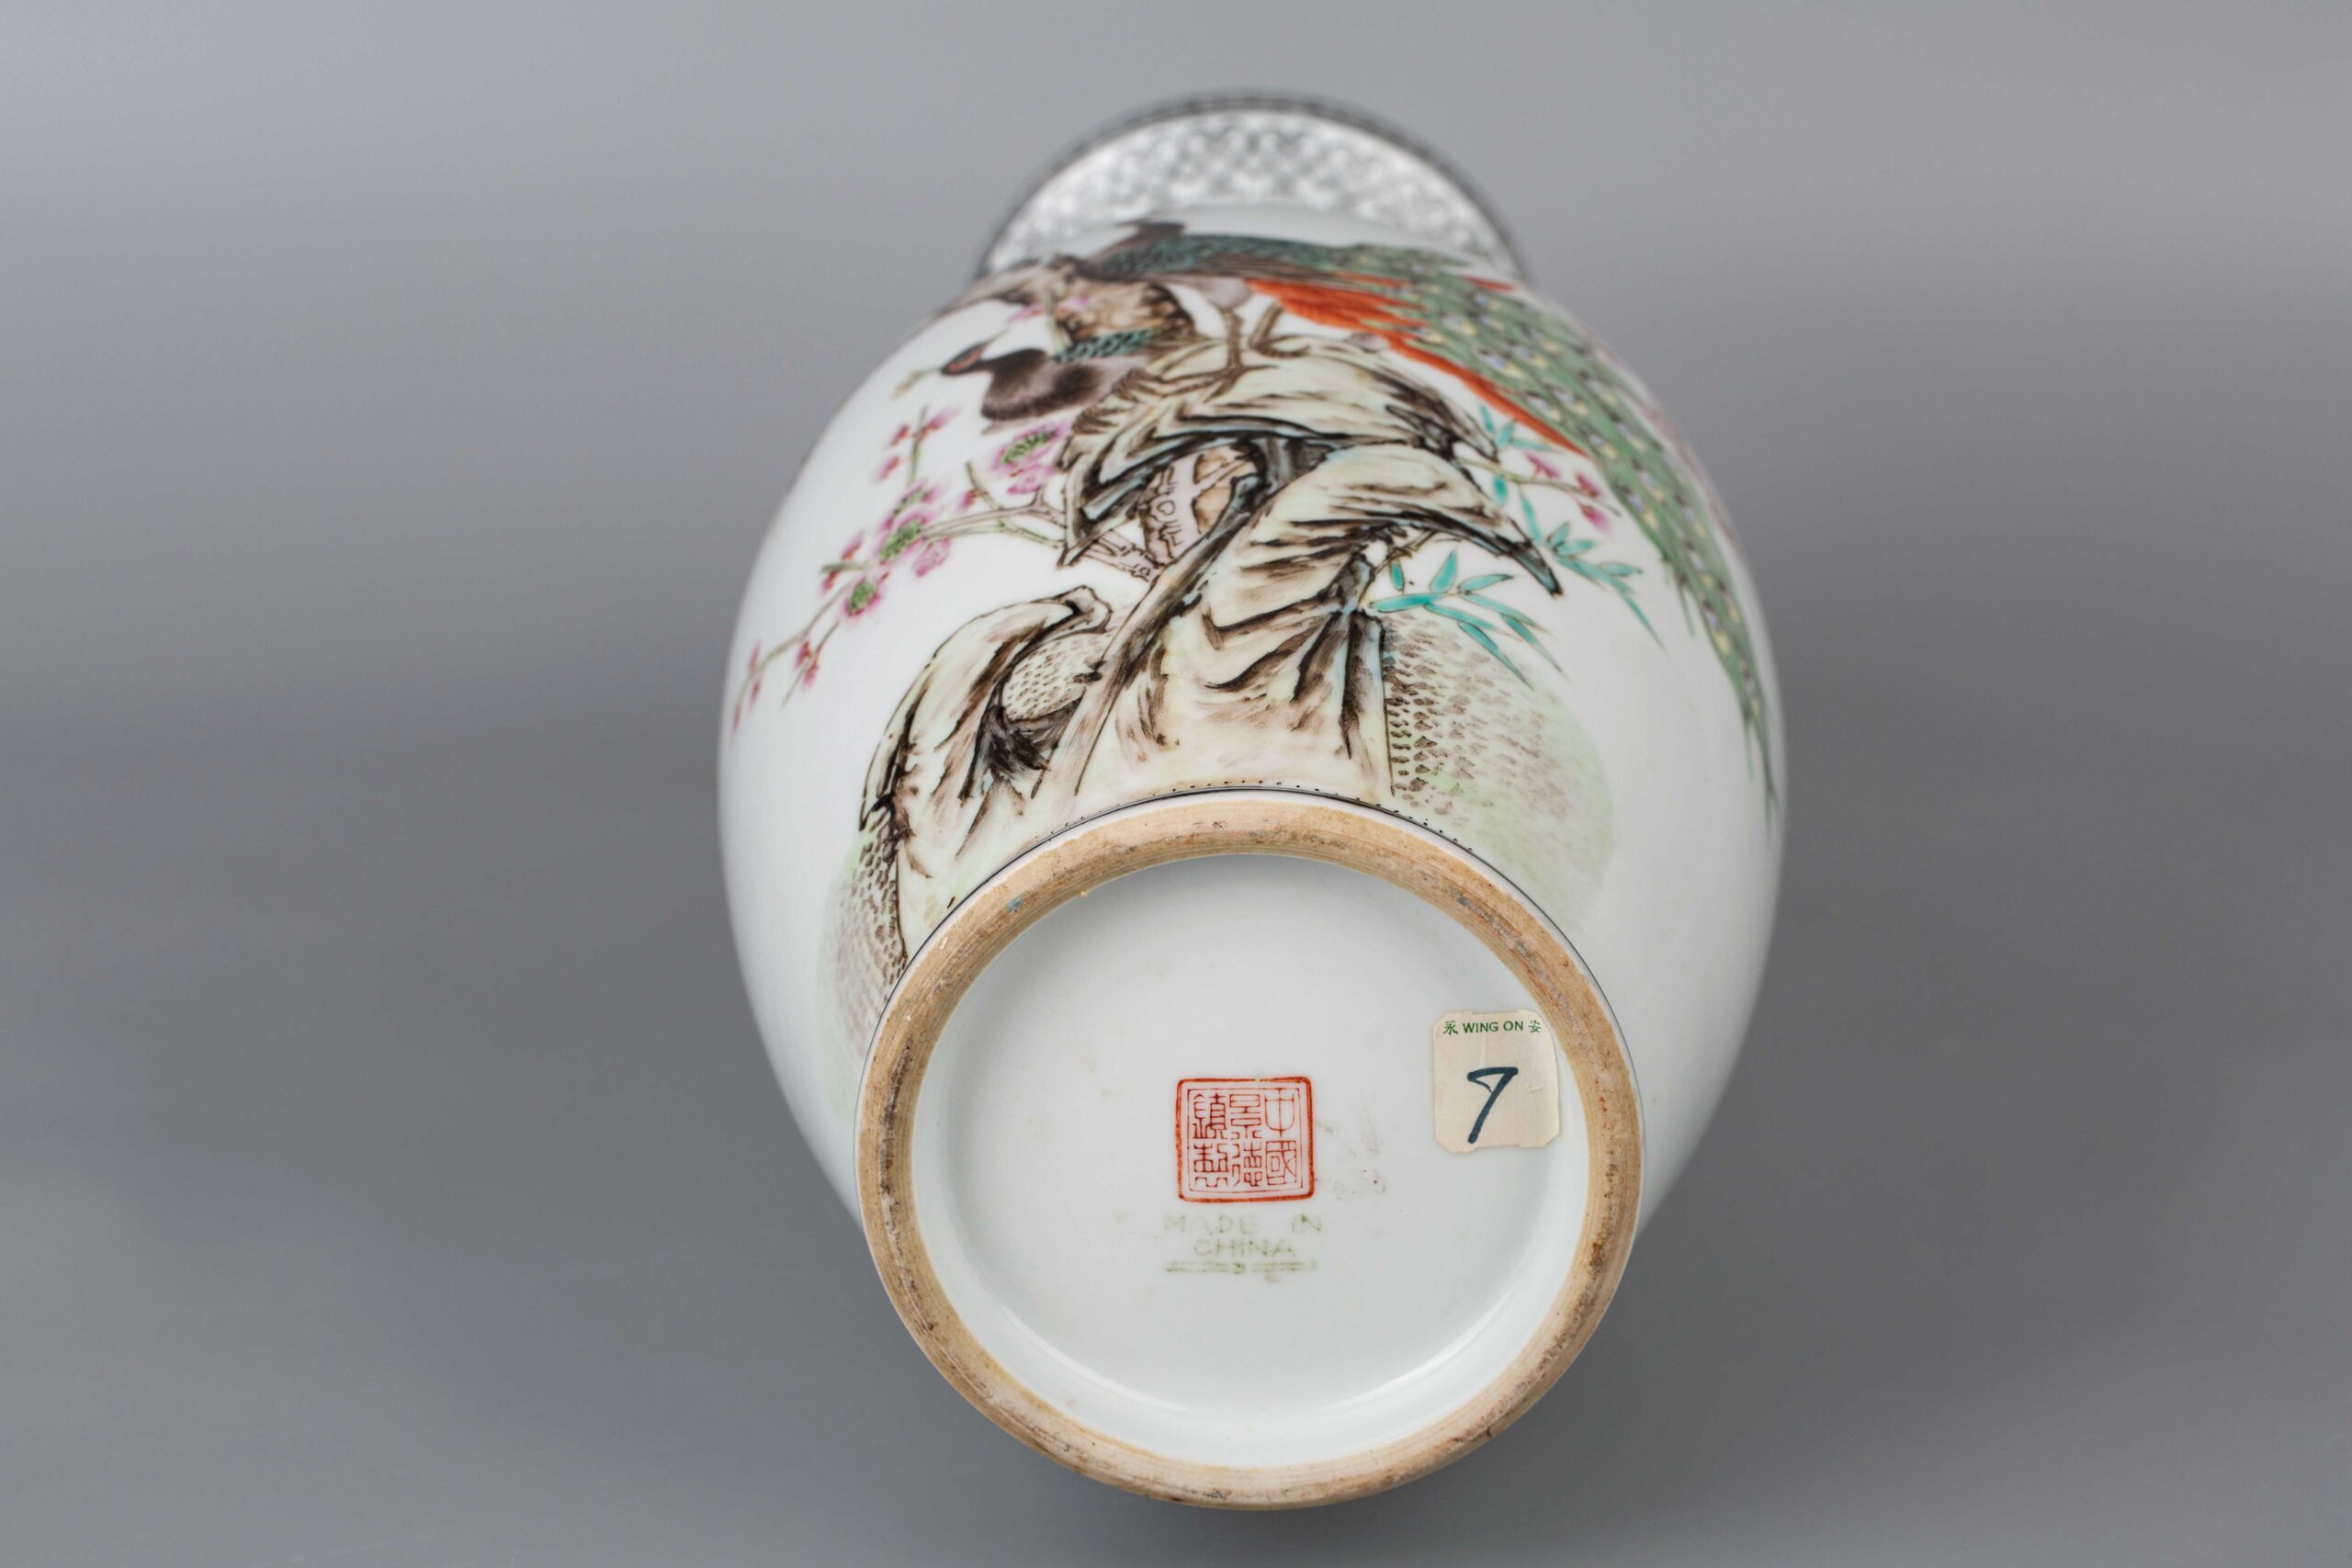 Flower and bird vase with China Jingdezhen Made mark花鸟赏瓶中国 